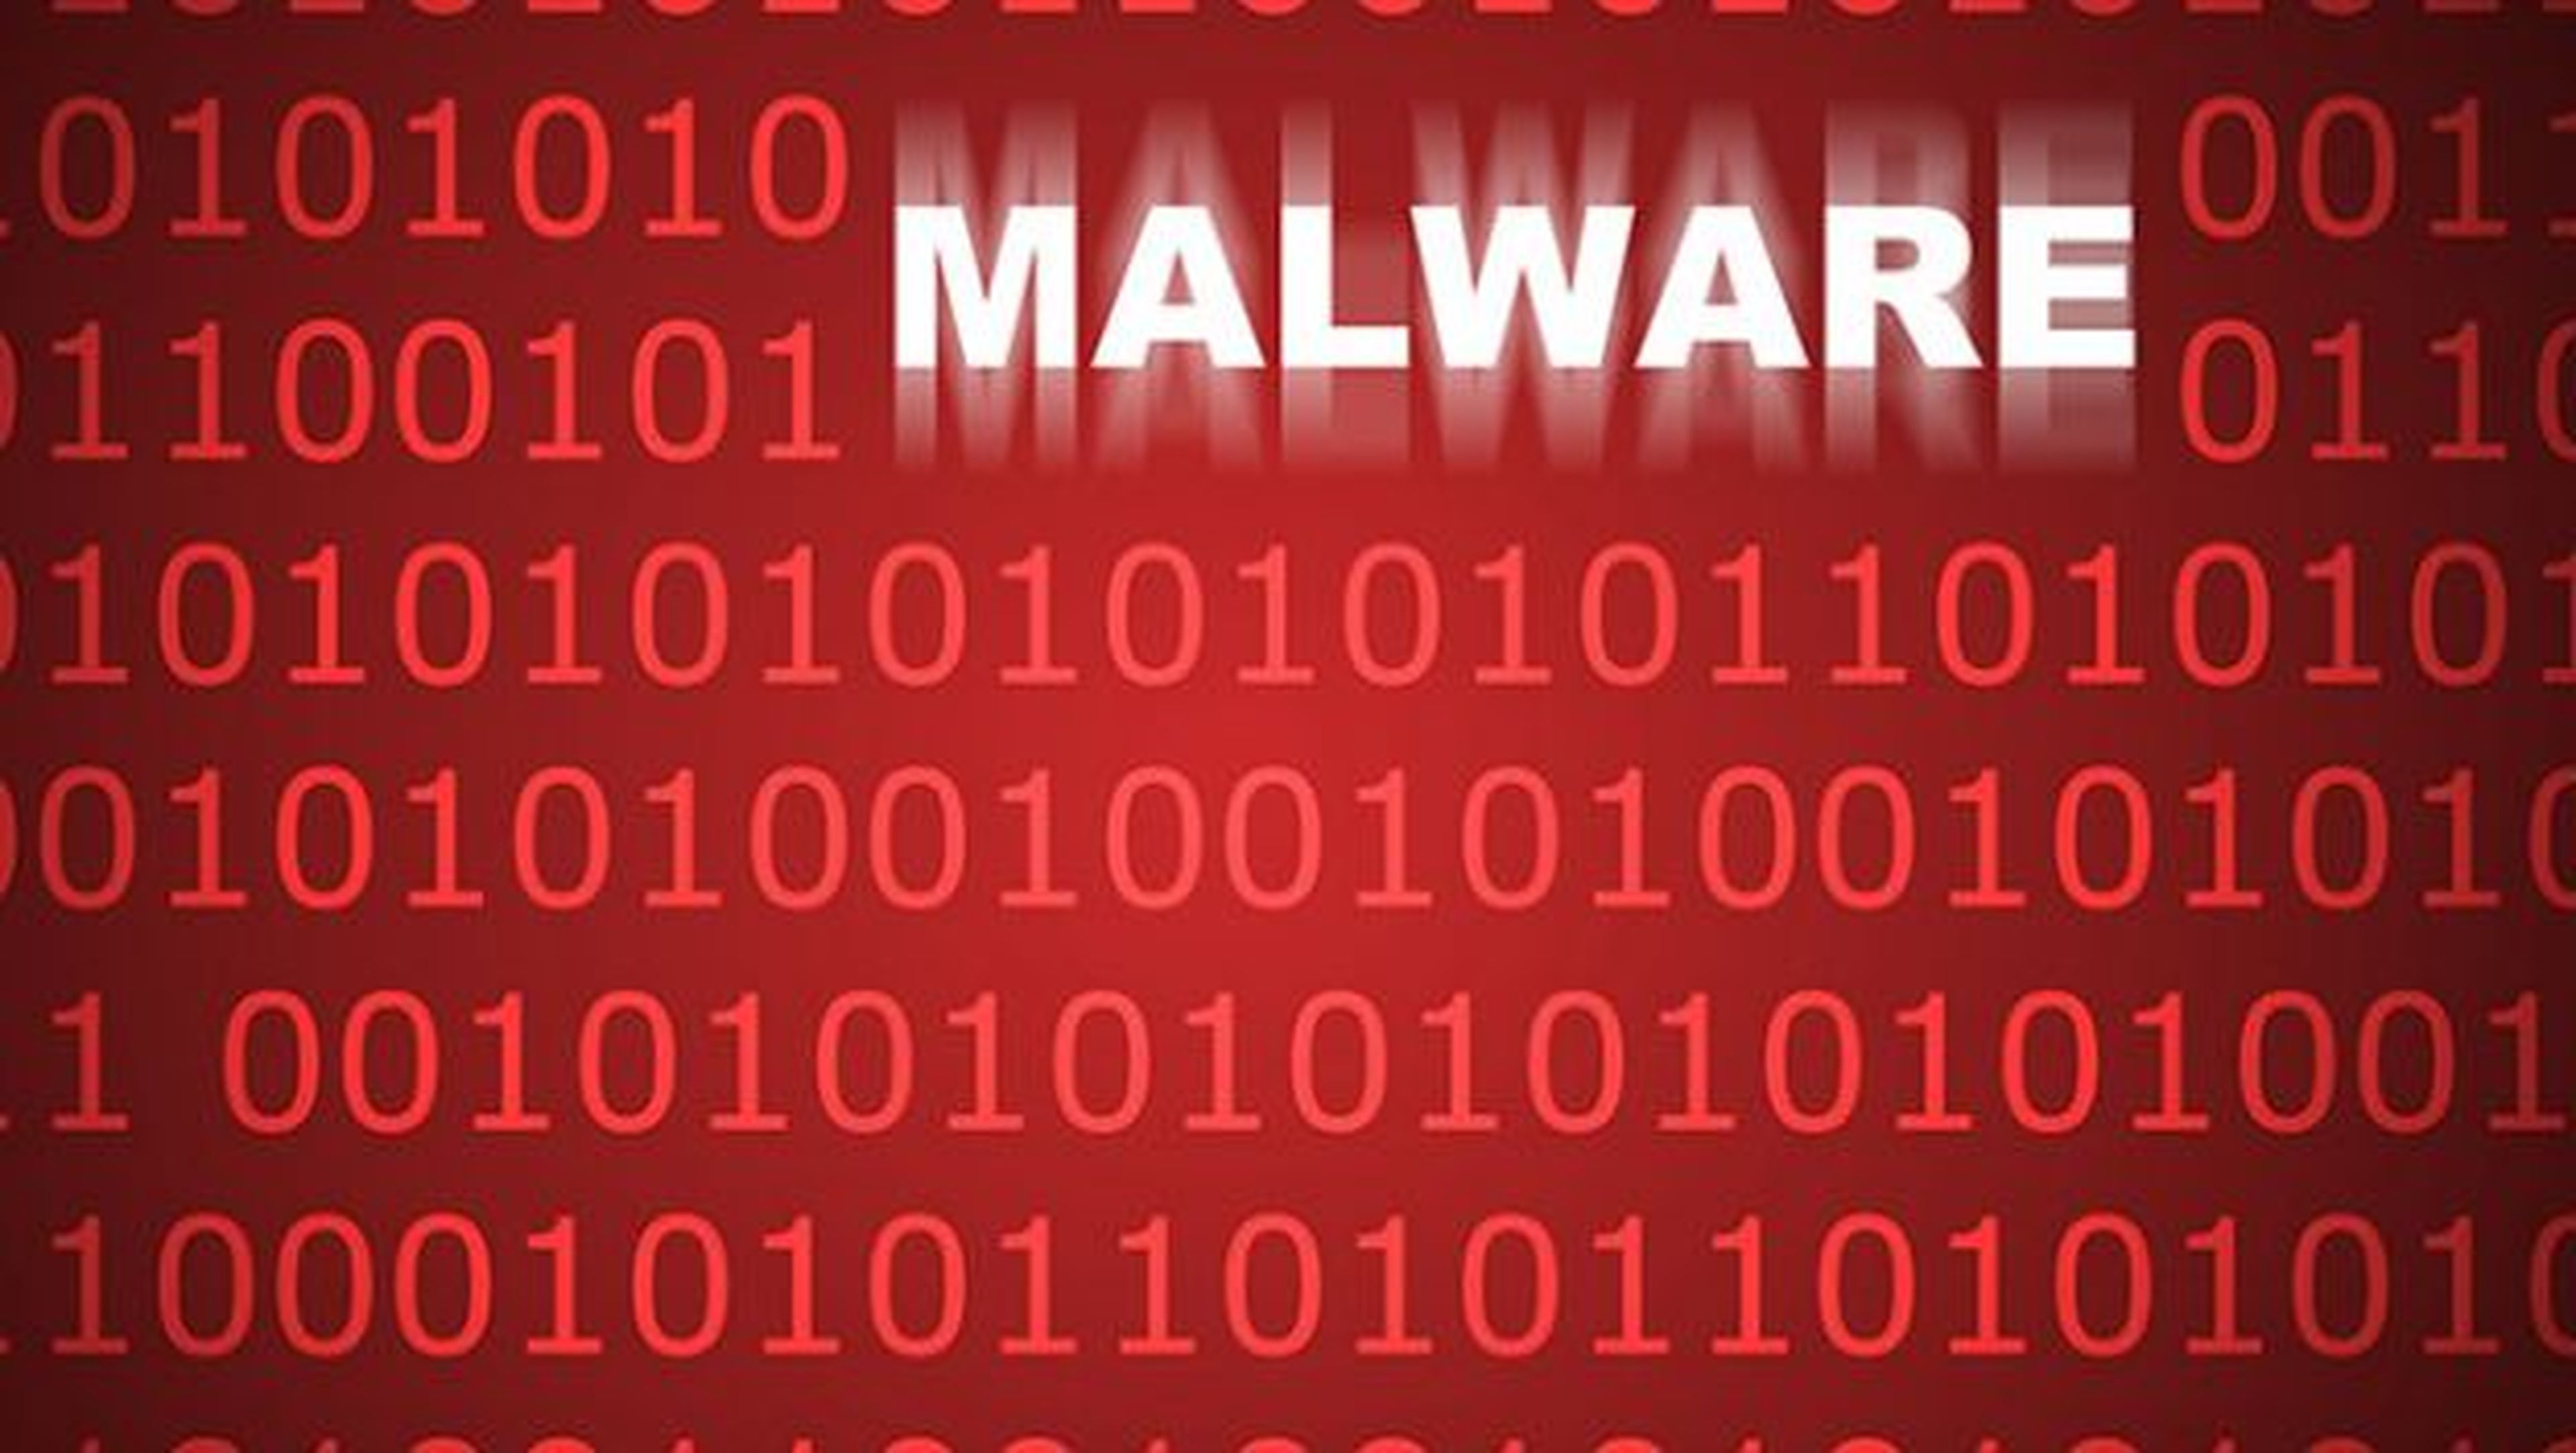 Protégete gratis de malware y ransomware con MBRFilter